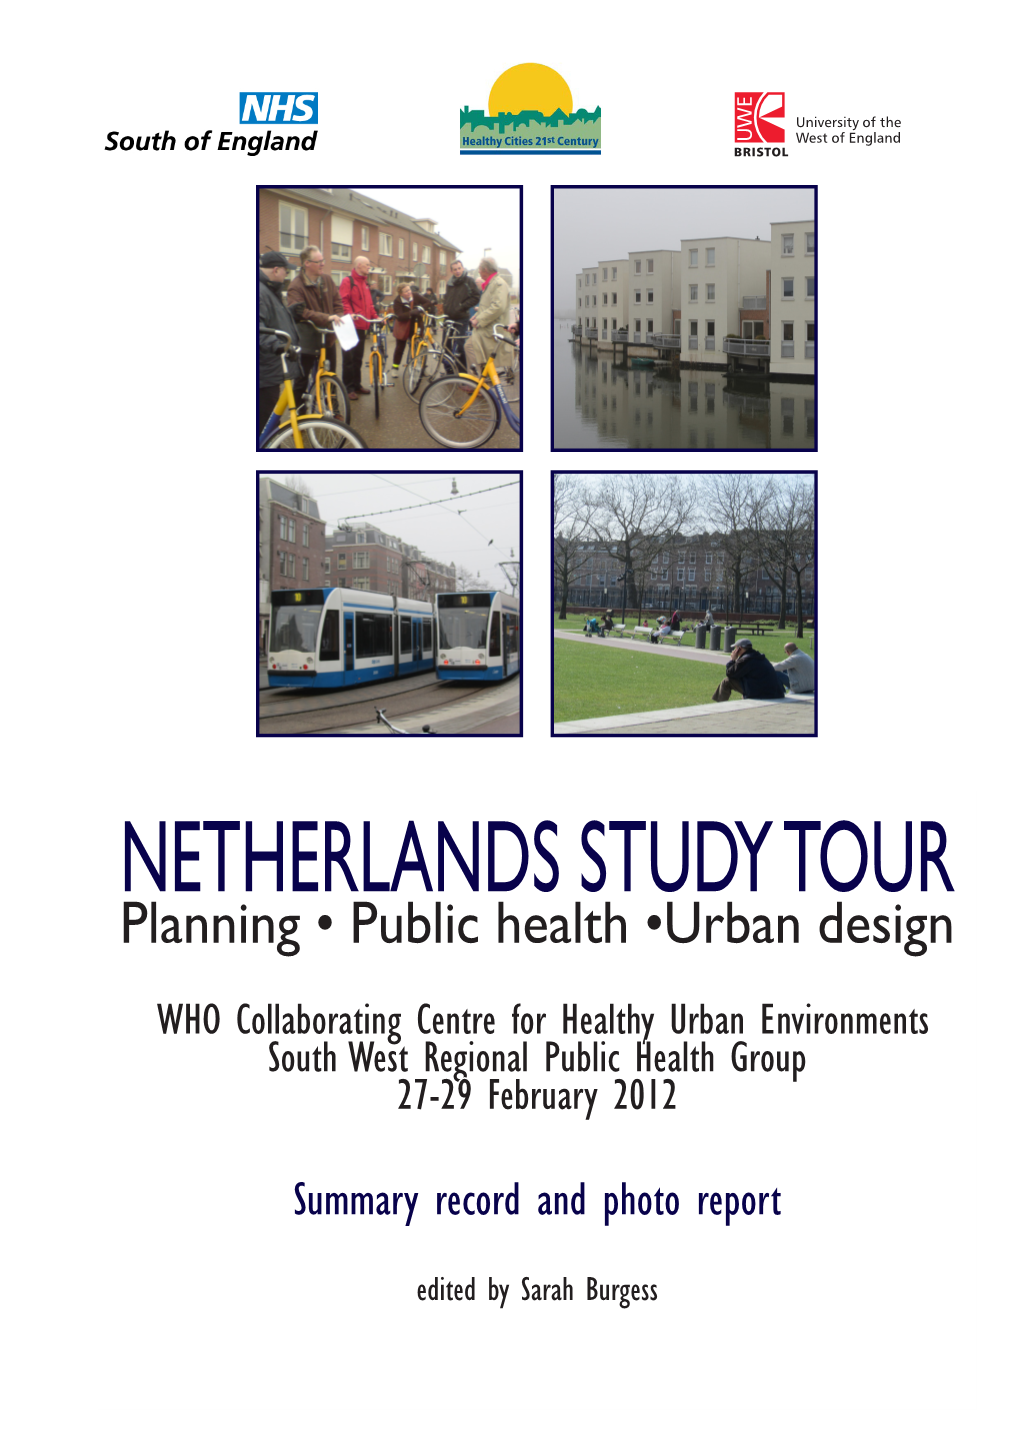 NETHERLANDS STUDY TOUR Planning • Public Health •Urban Design